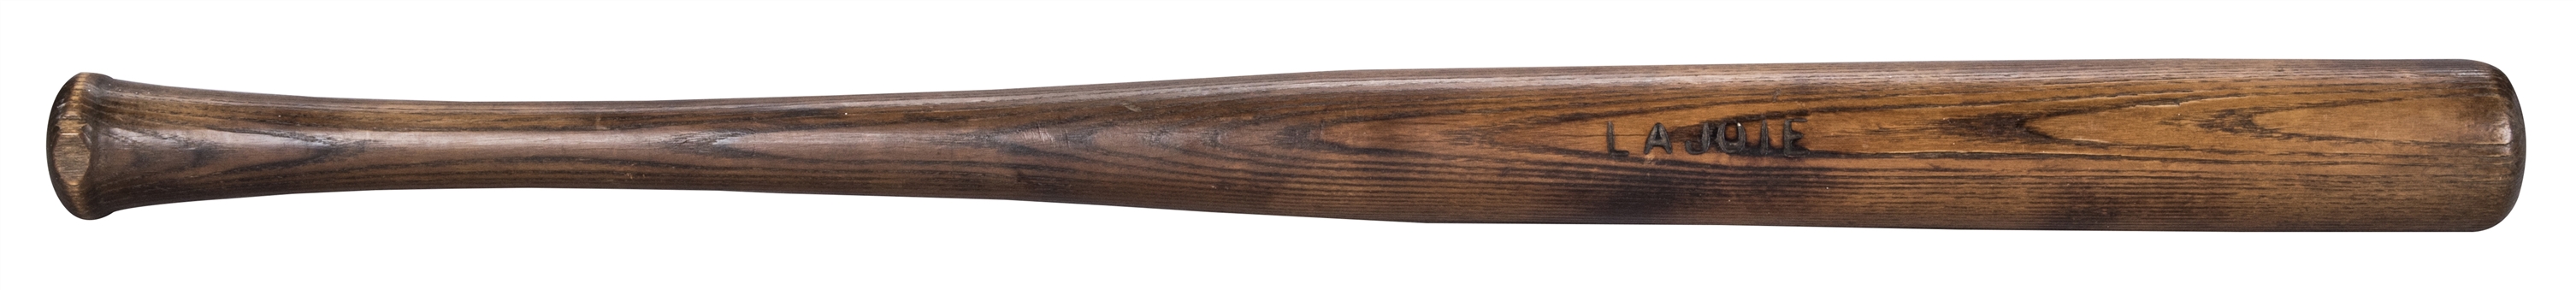 Circa 1896-1905 Napoleon Lajoie Game Used Professional Model Bat (MEARS)